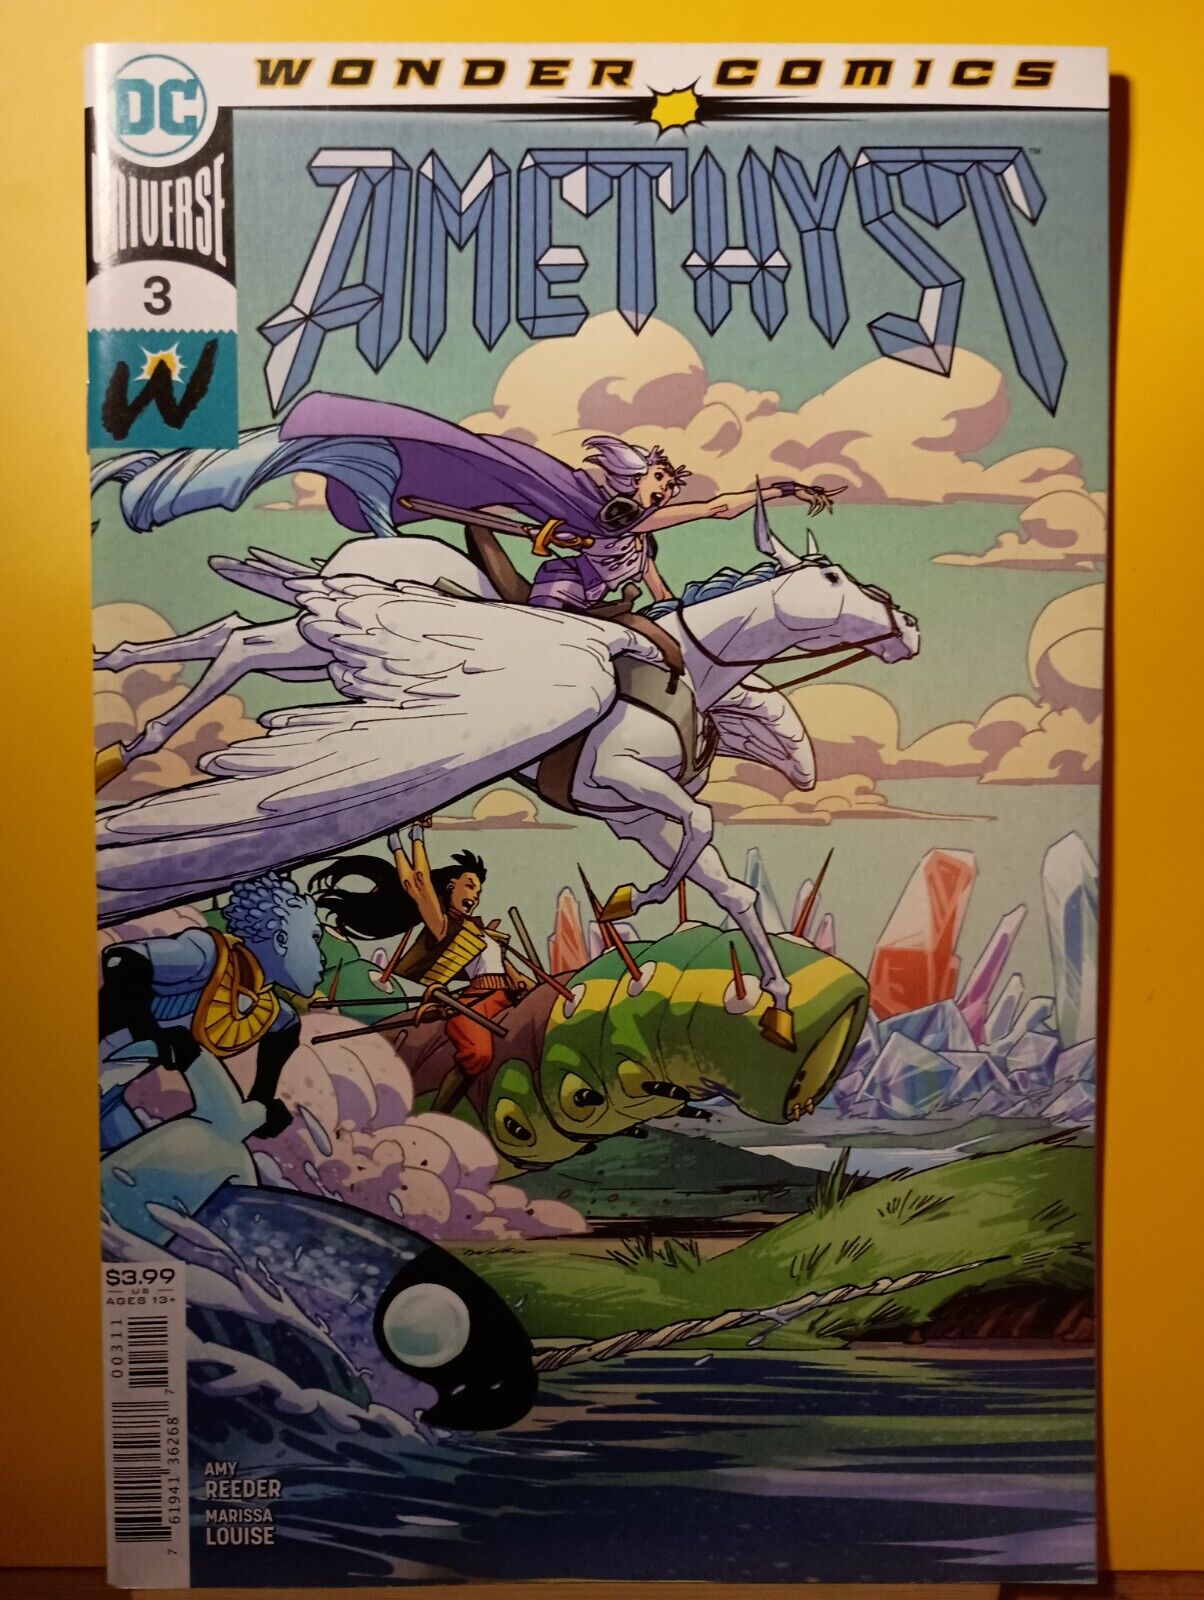 2020 DC Wonder Comics Amethyst Issue 3 Amy Reeder Cover Artist 